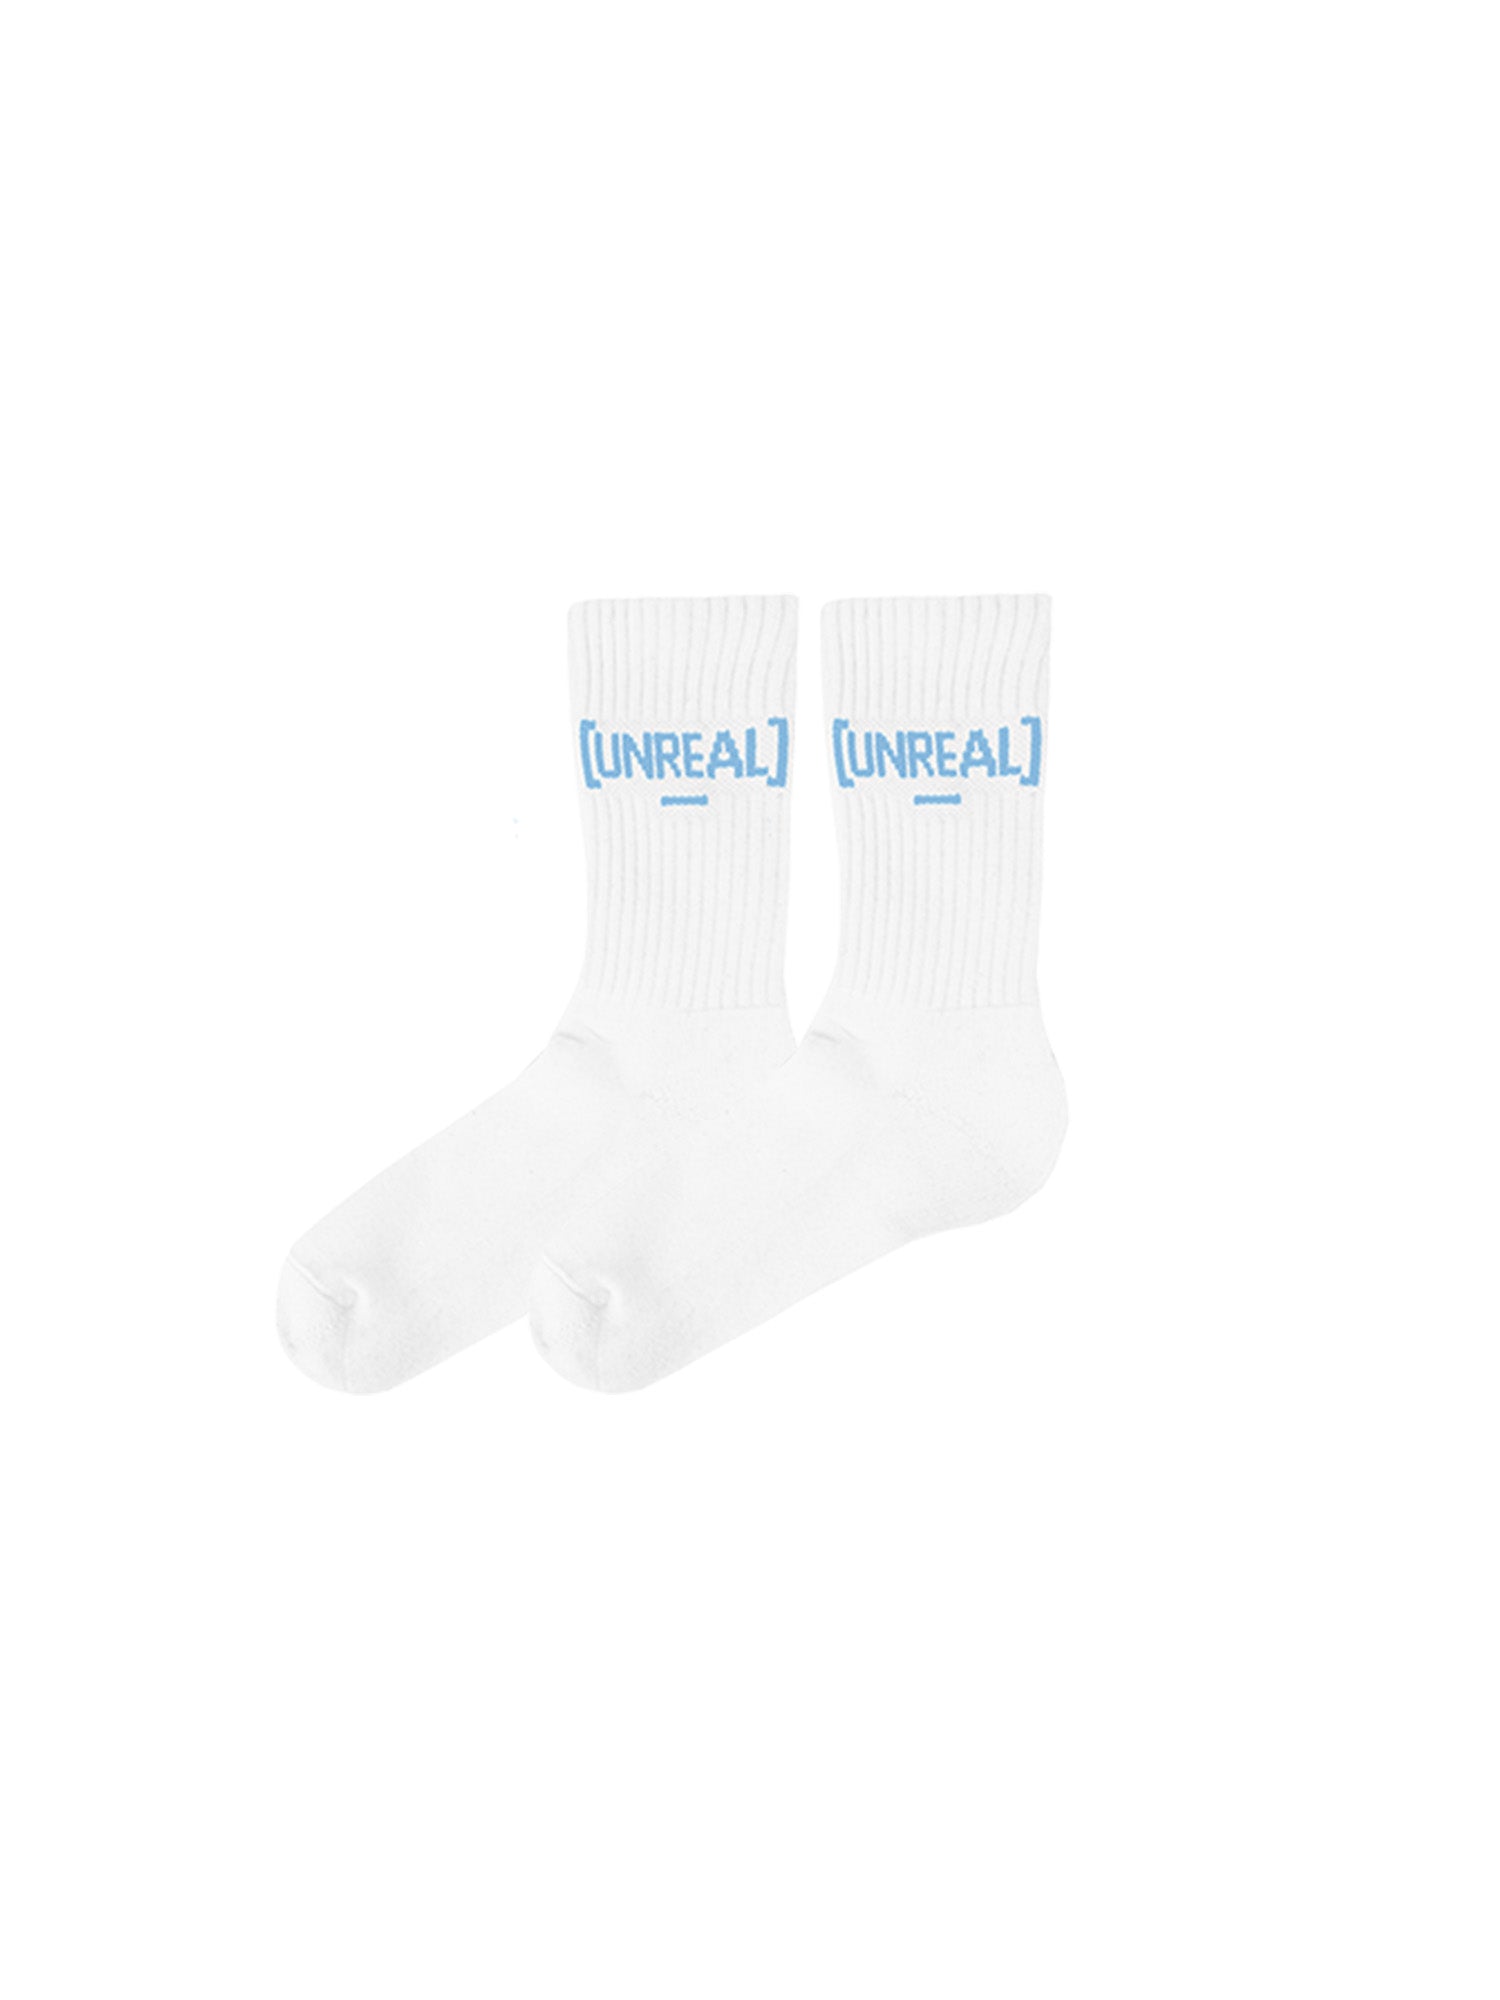 UNREAL high quality cotton logo socks - [UNREAL]streetwear